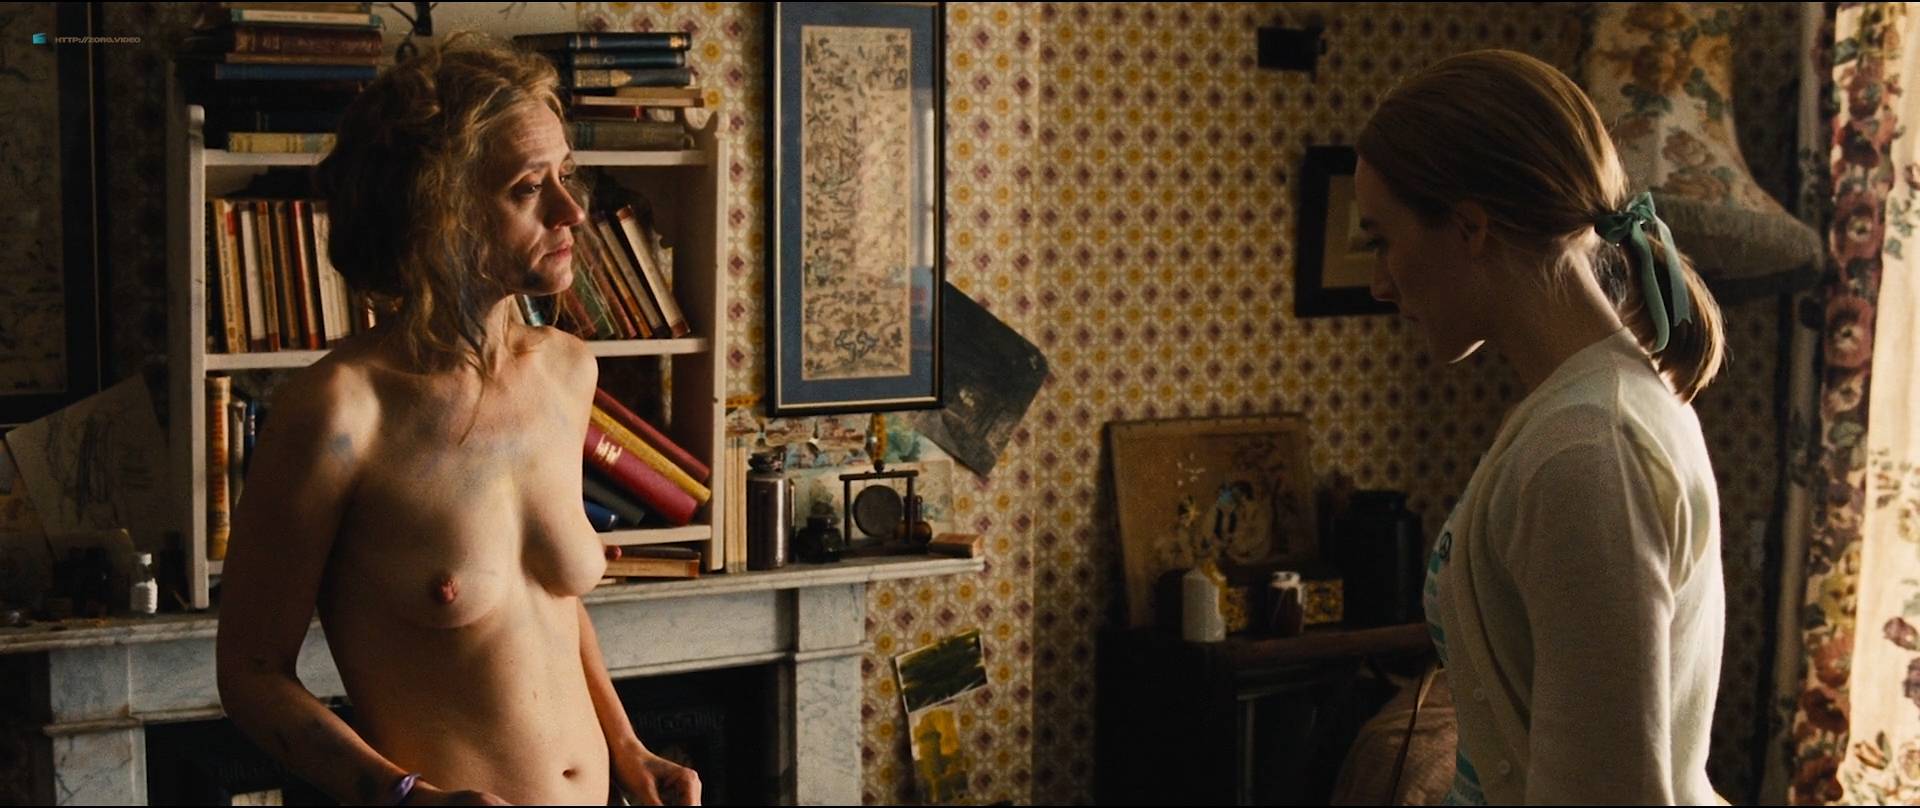 Saoirse ronan nudes - 🧡 Saoirse Ronan Nude Casting Couch Sex Tape.